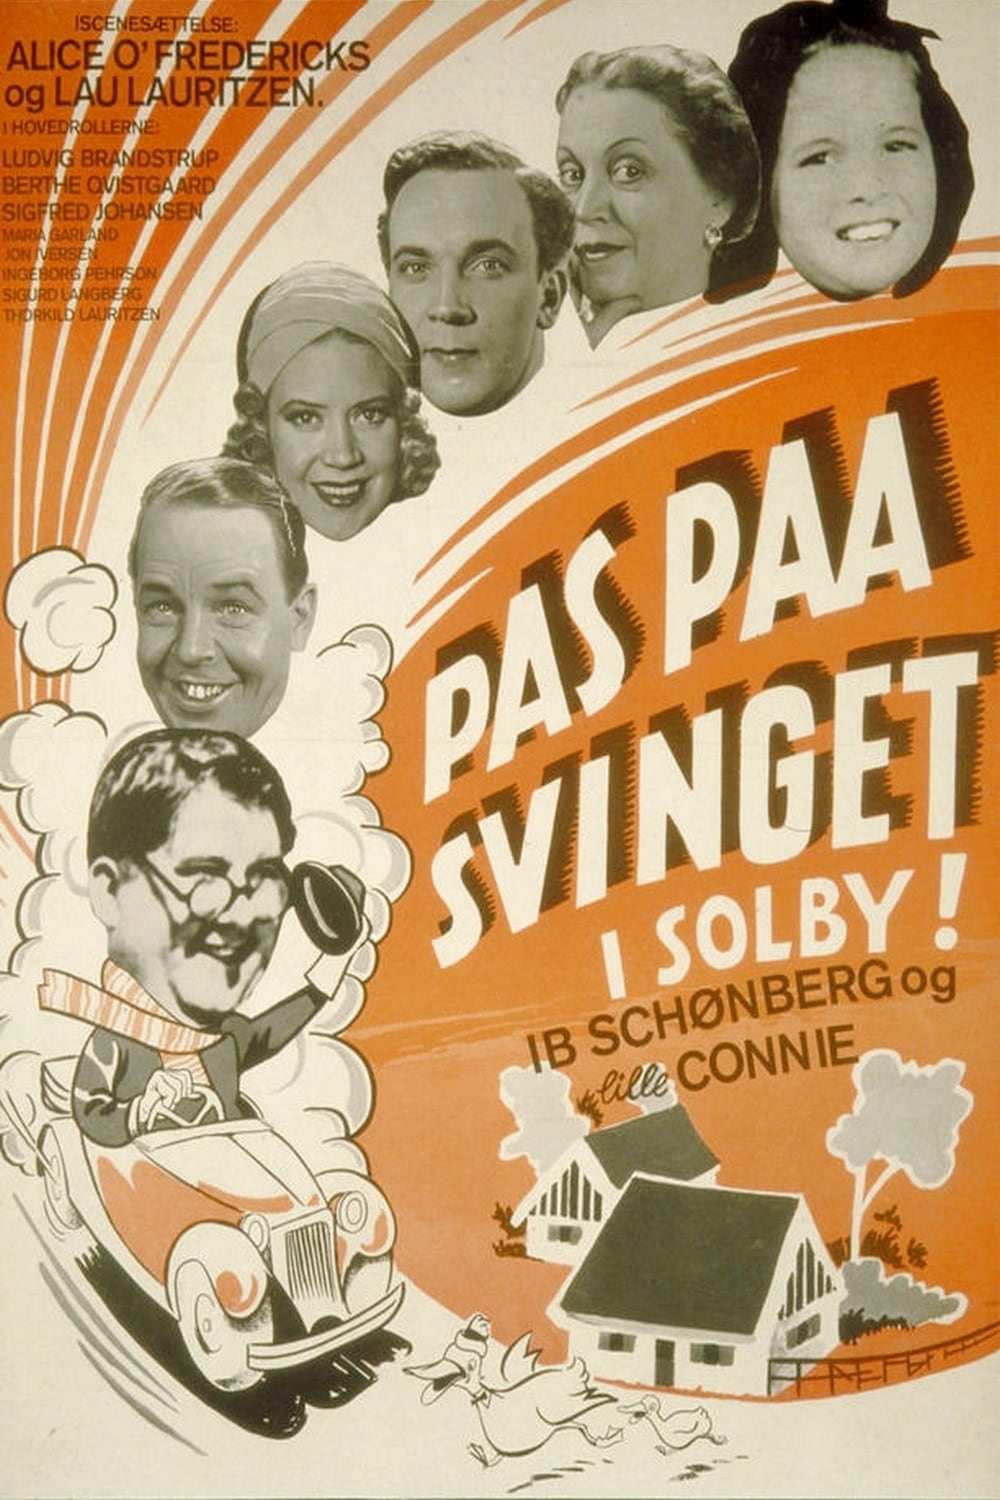 Pas paa svinget i Solby (1940)